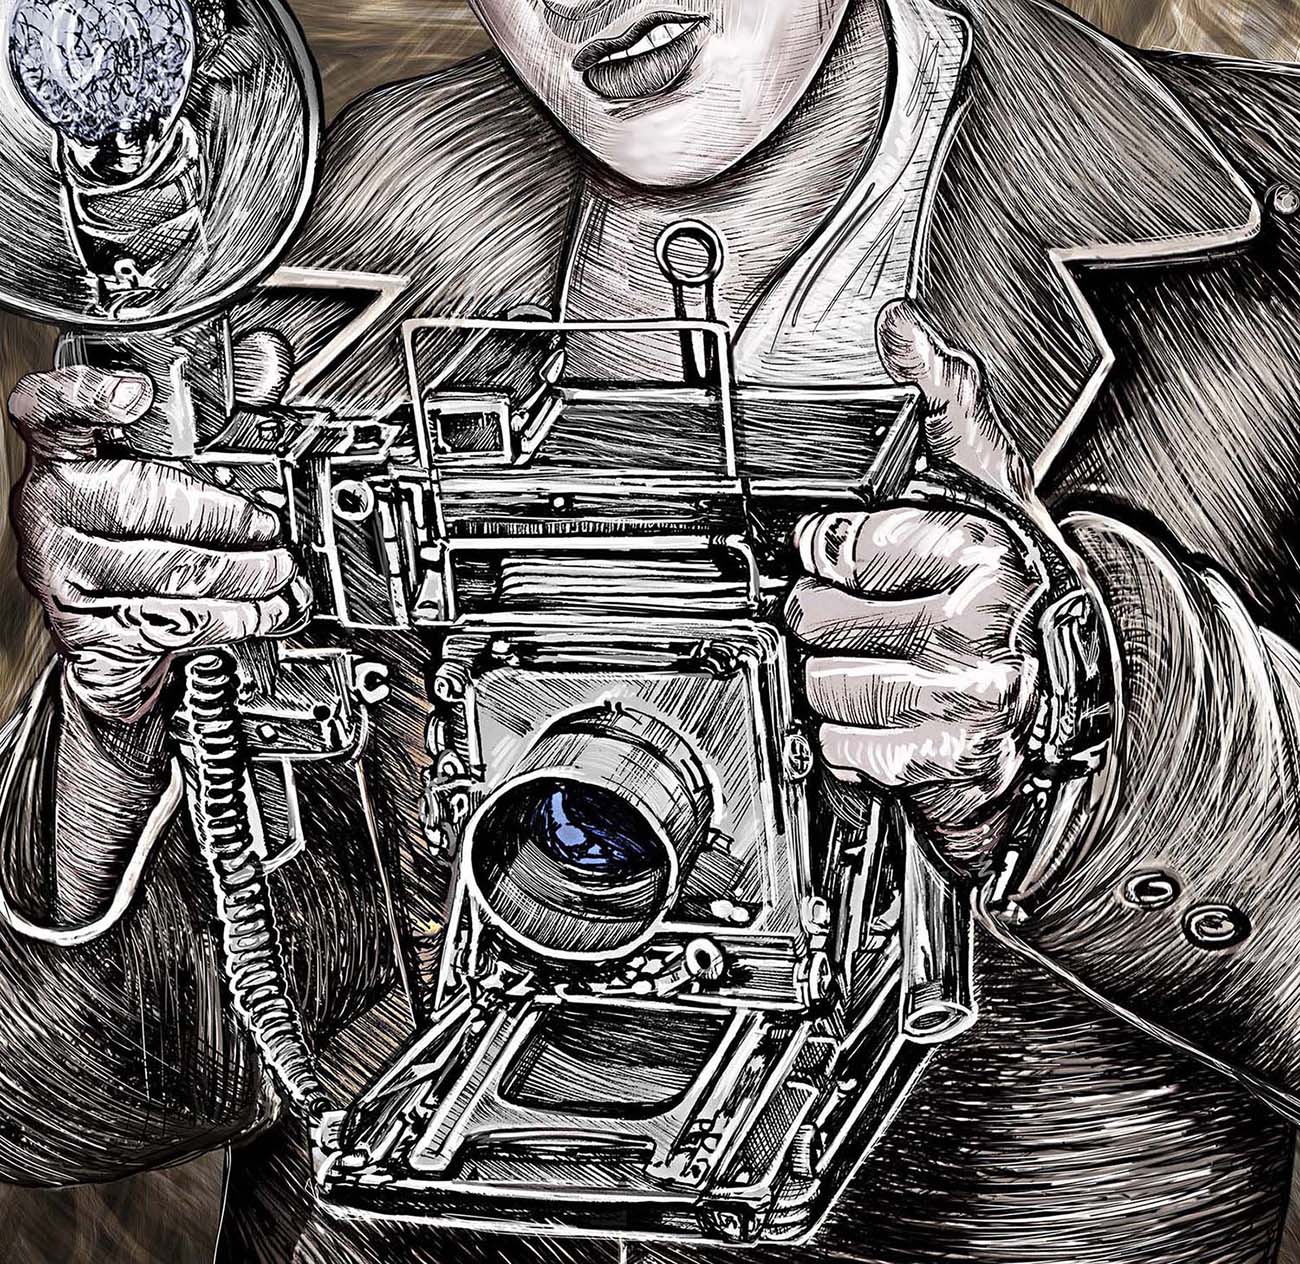 Camera King Close View ink illustration by Doug LaRue